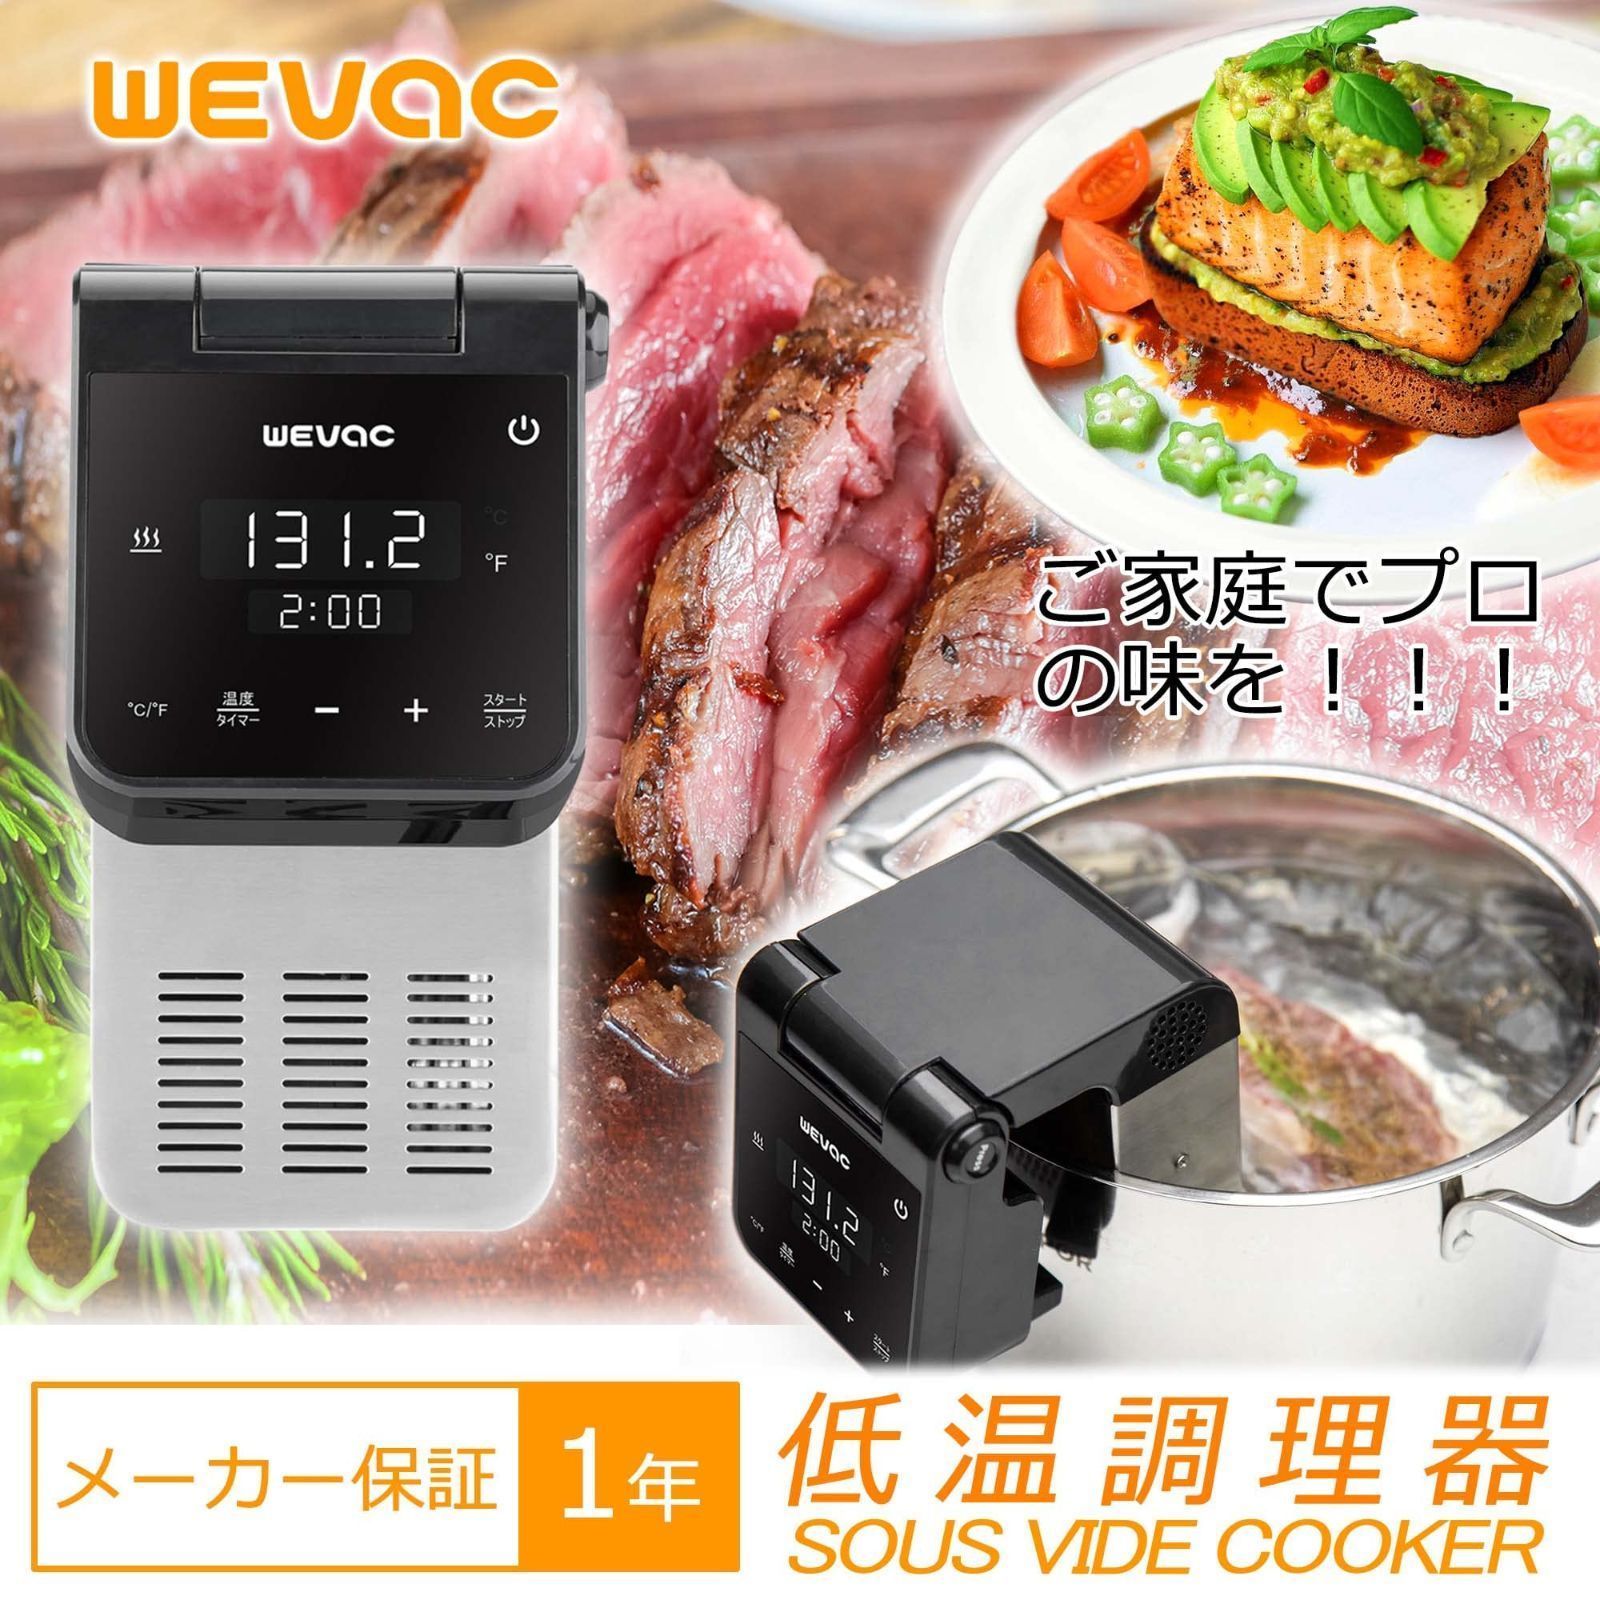 Wevac 低温調理器 1100W スロークッカー 低温調理器具 低音調理機 低温